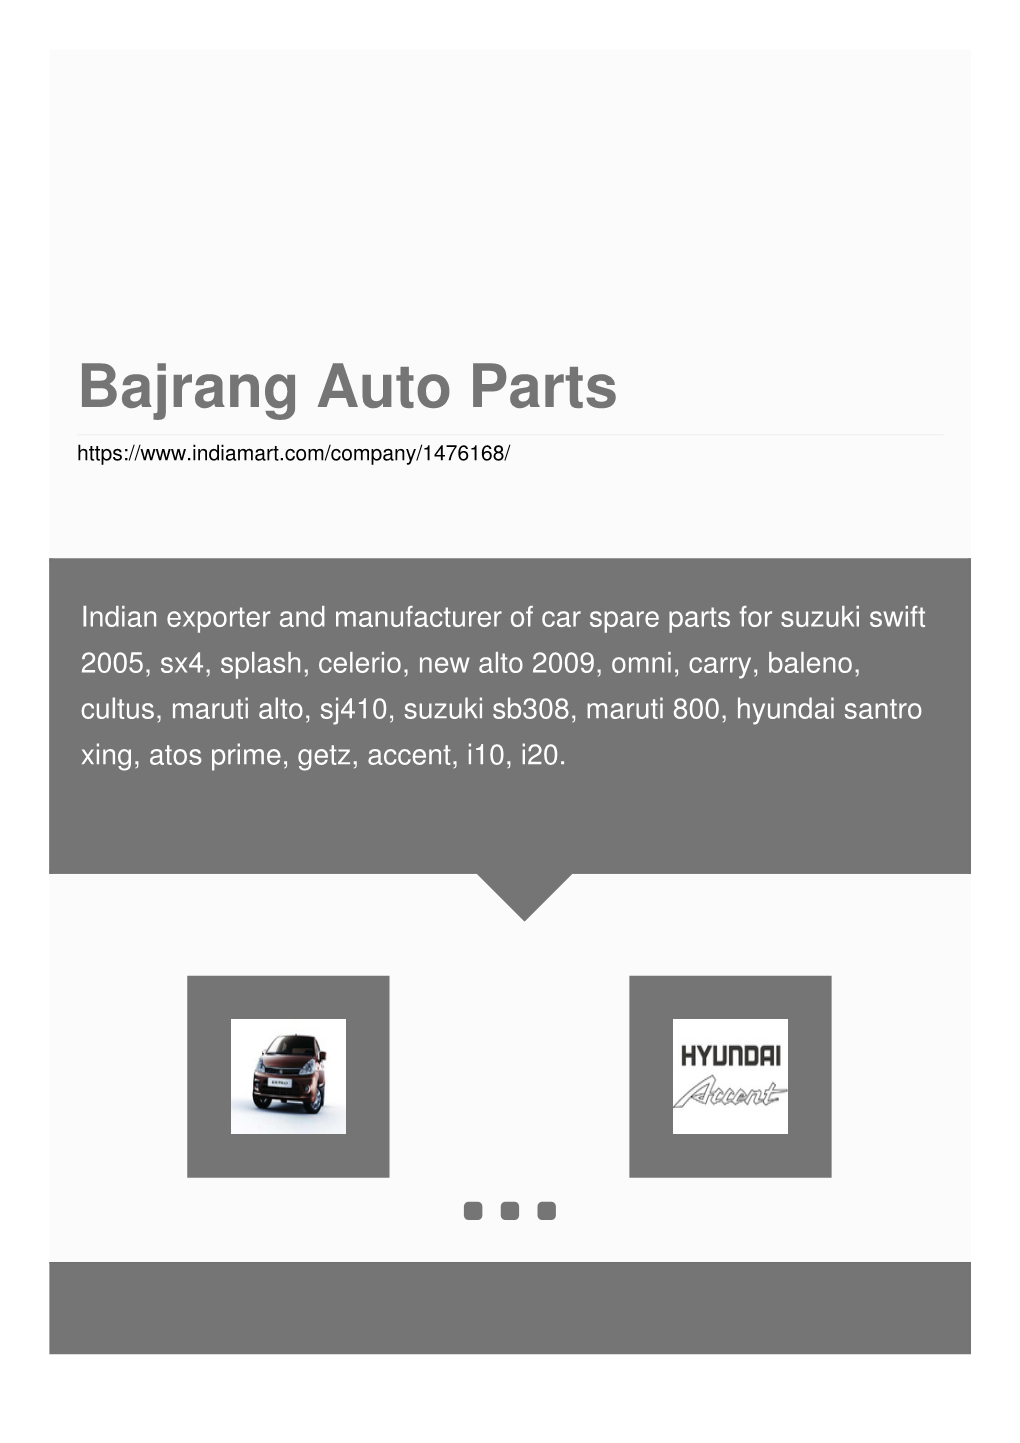 Bajrang Auto Parts